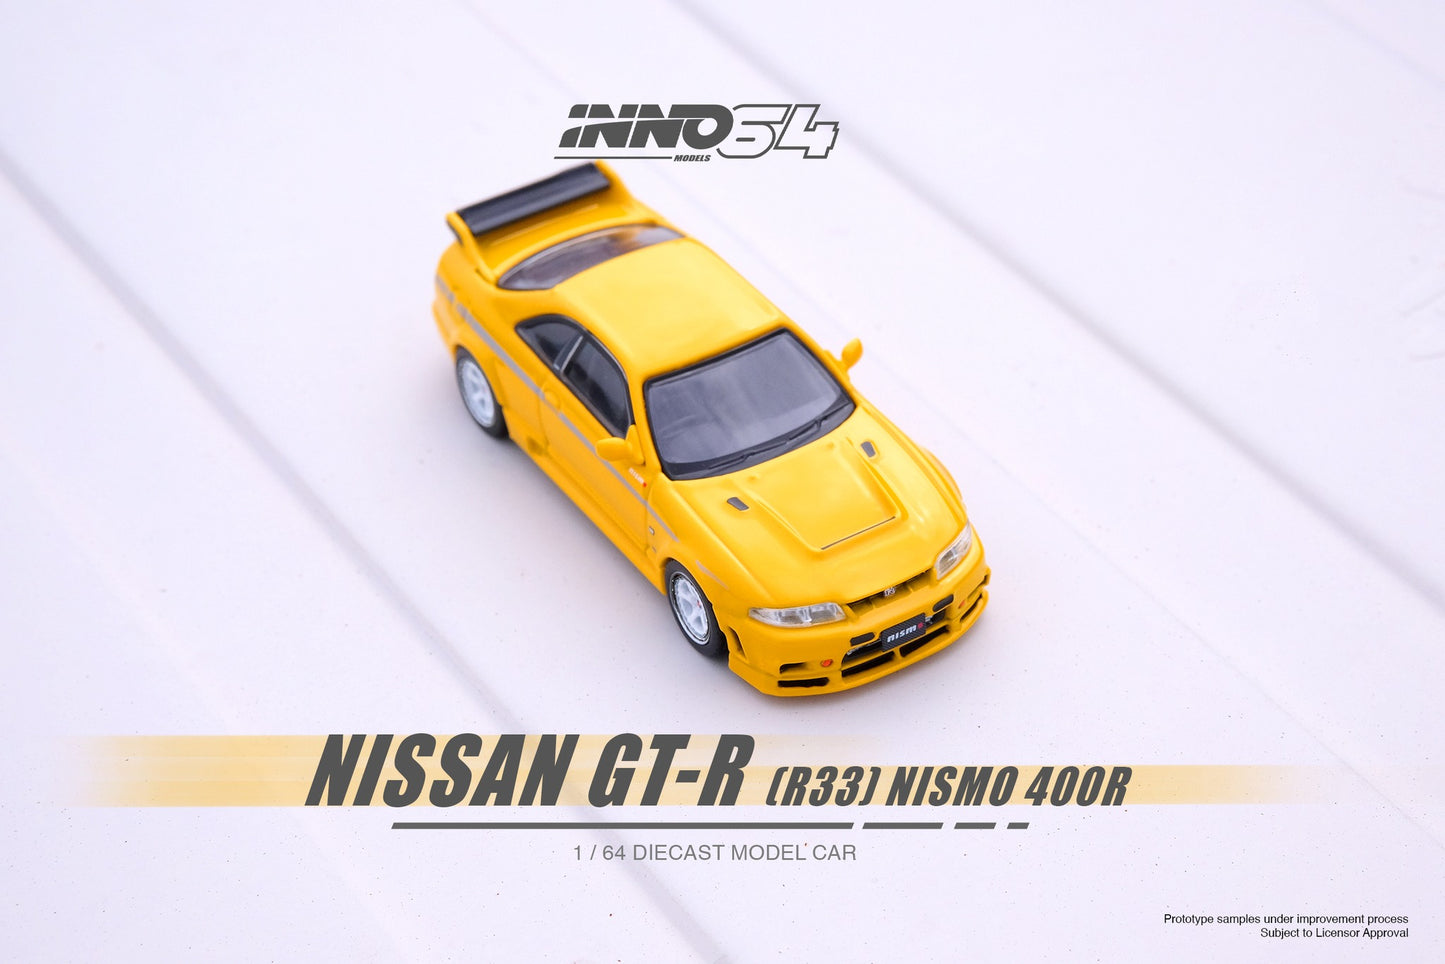 Inno64 Nissan Skyline GT-R (R33) Nismo 400R in Lightning Yellow